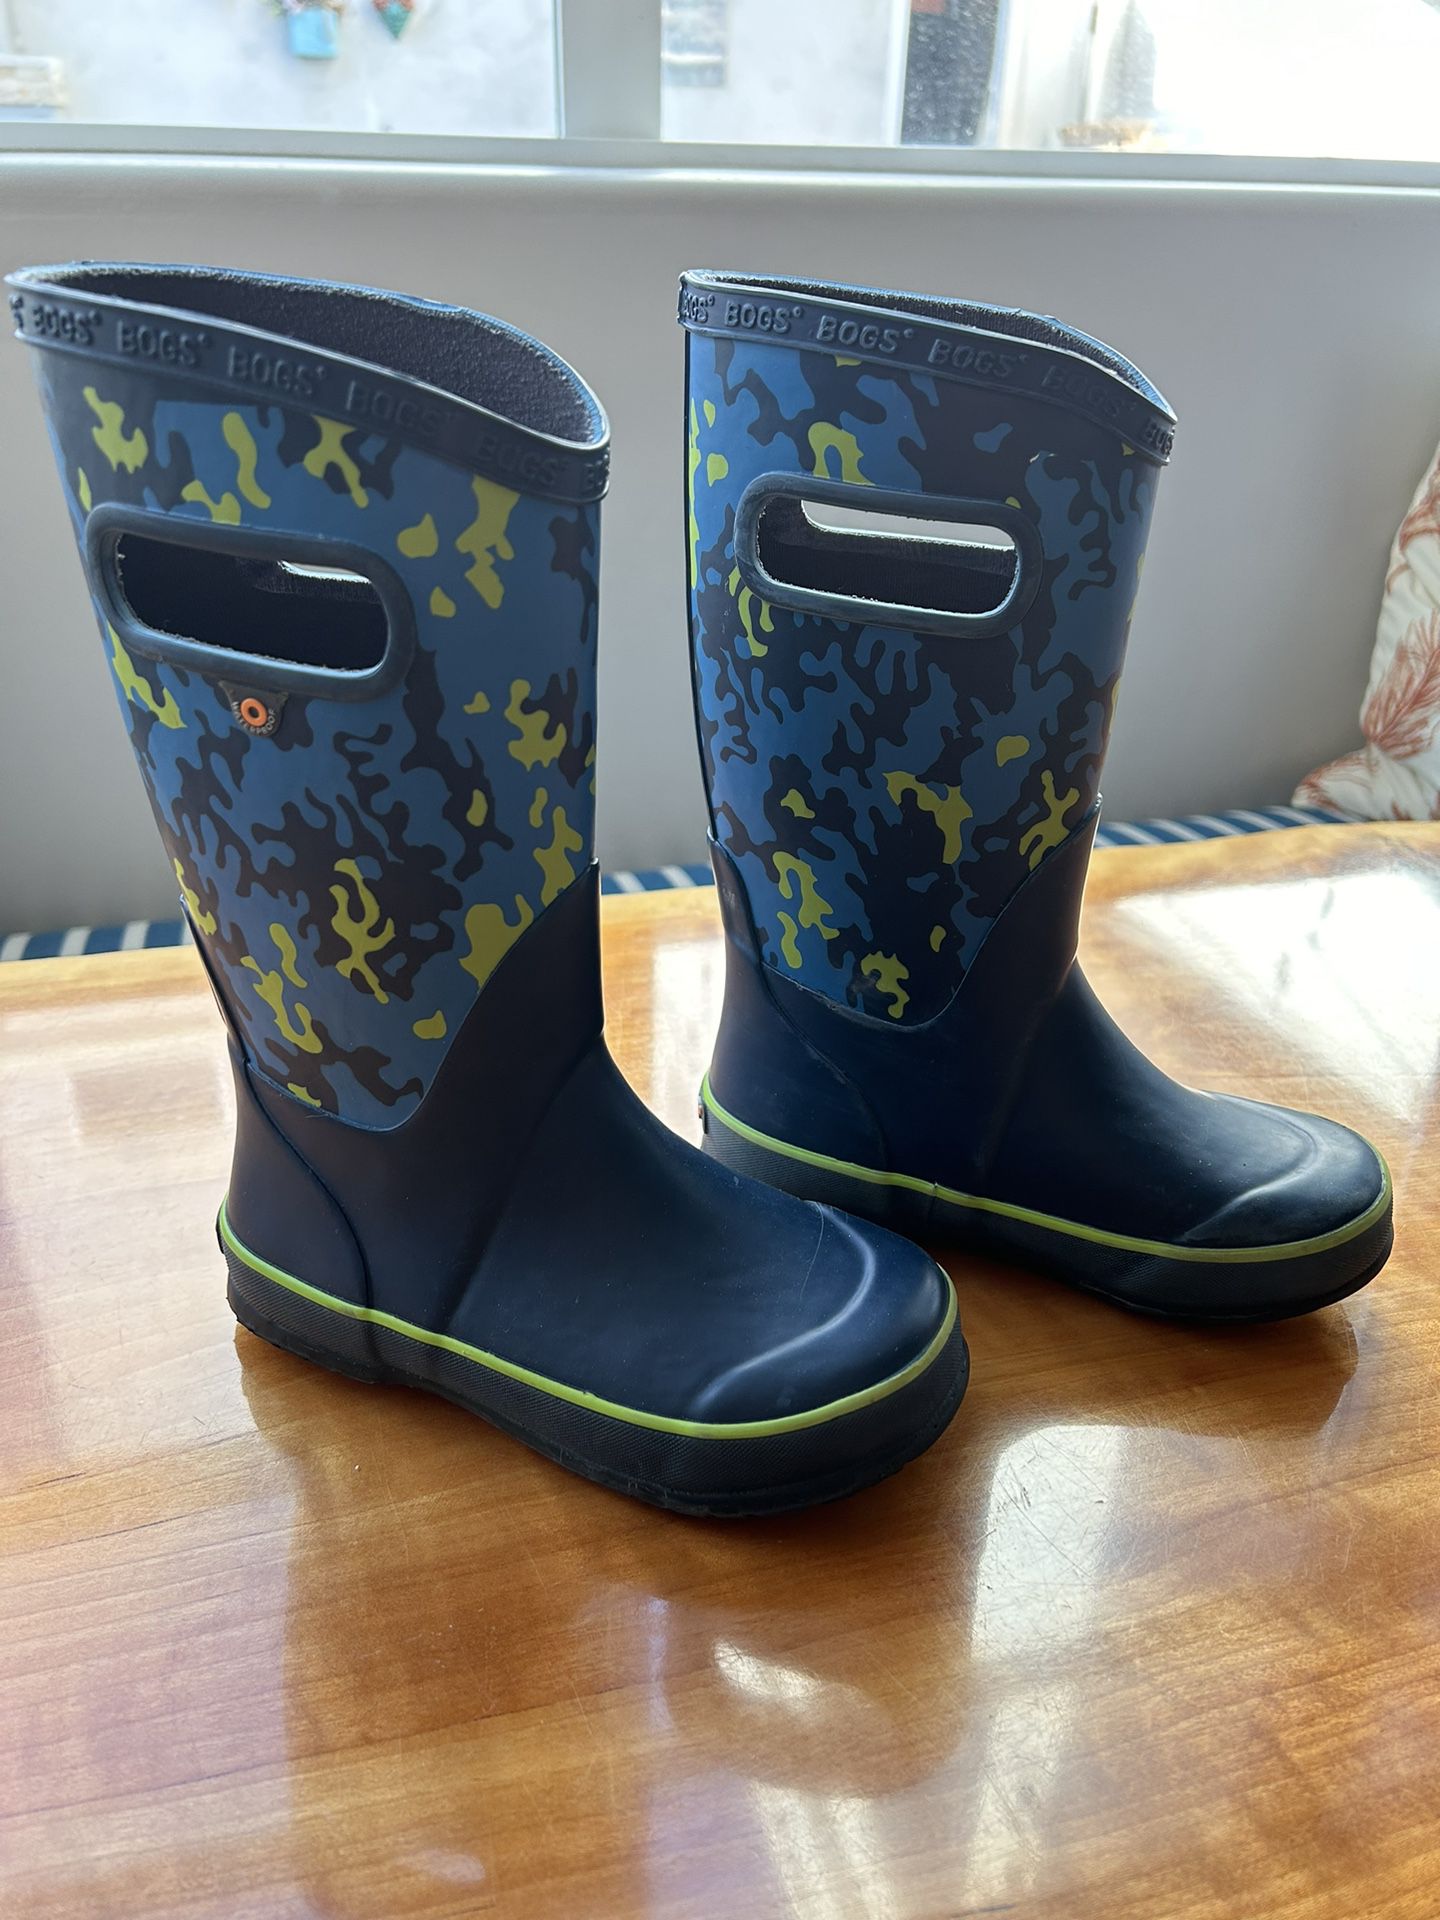 Bogs Rain boots